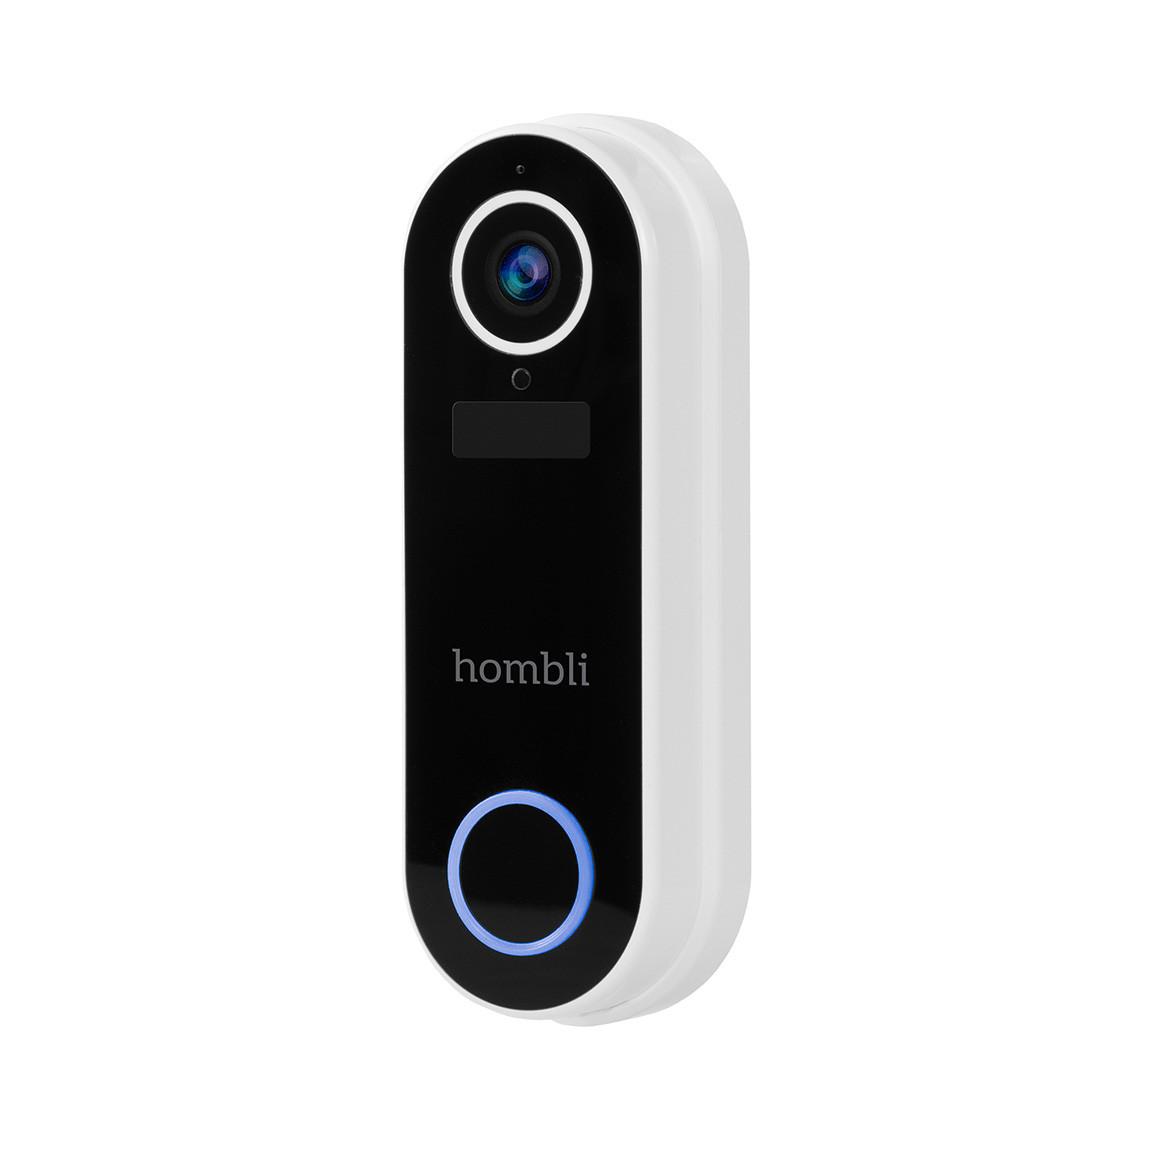 Hombli Smart Doorbell V2 - Smarte Video-Türklingel schräge Ansicht